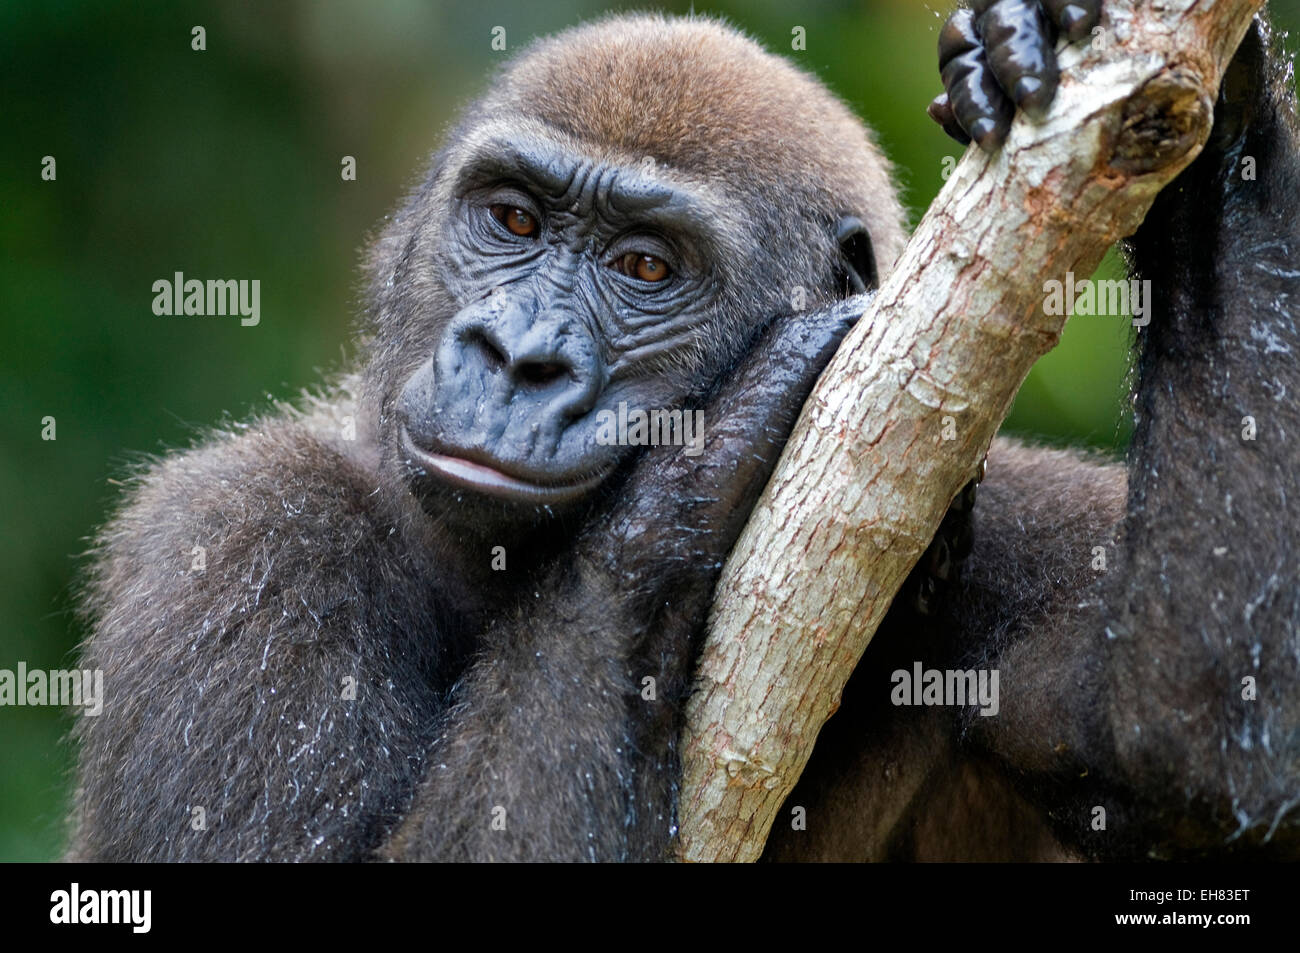 Riabilitato orfani pianura occidentale gorilla reintrodotti in habitat naturale, Parc de la Lekedi, Haut-Ogooue, Gabon, Africa Foto Stock